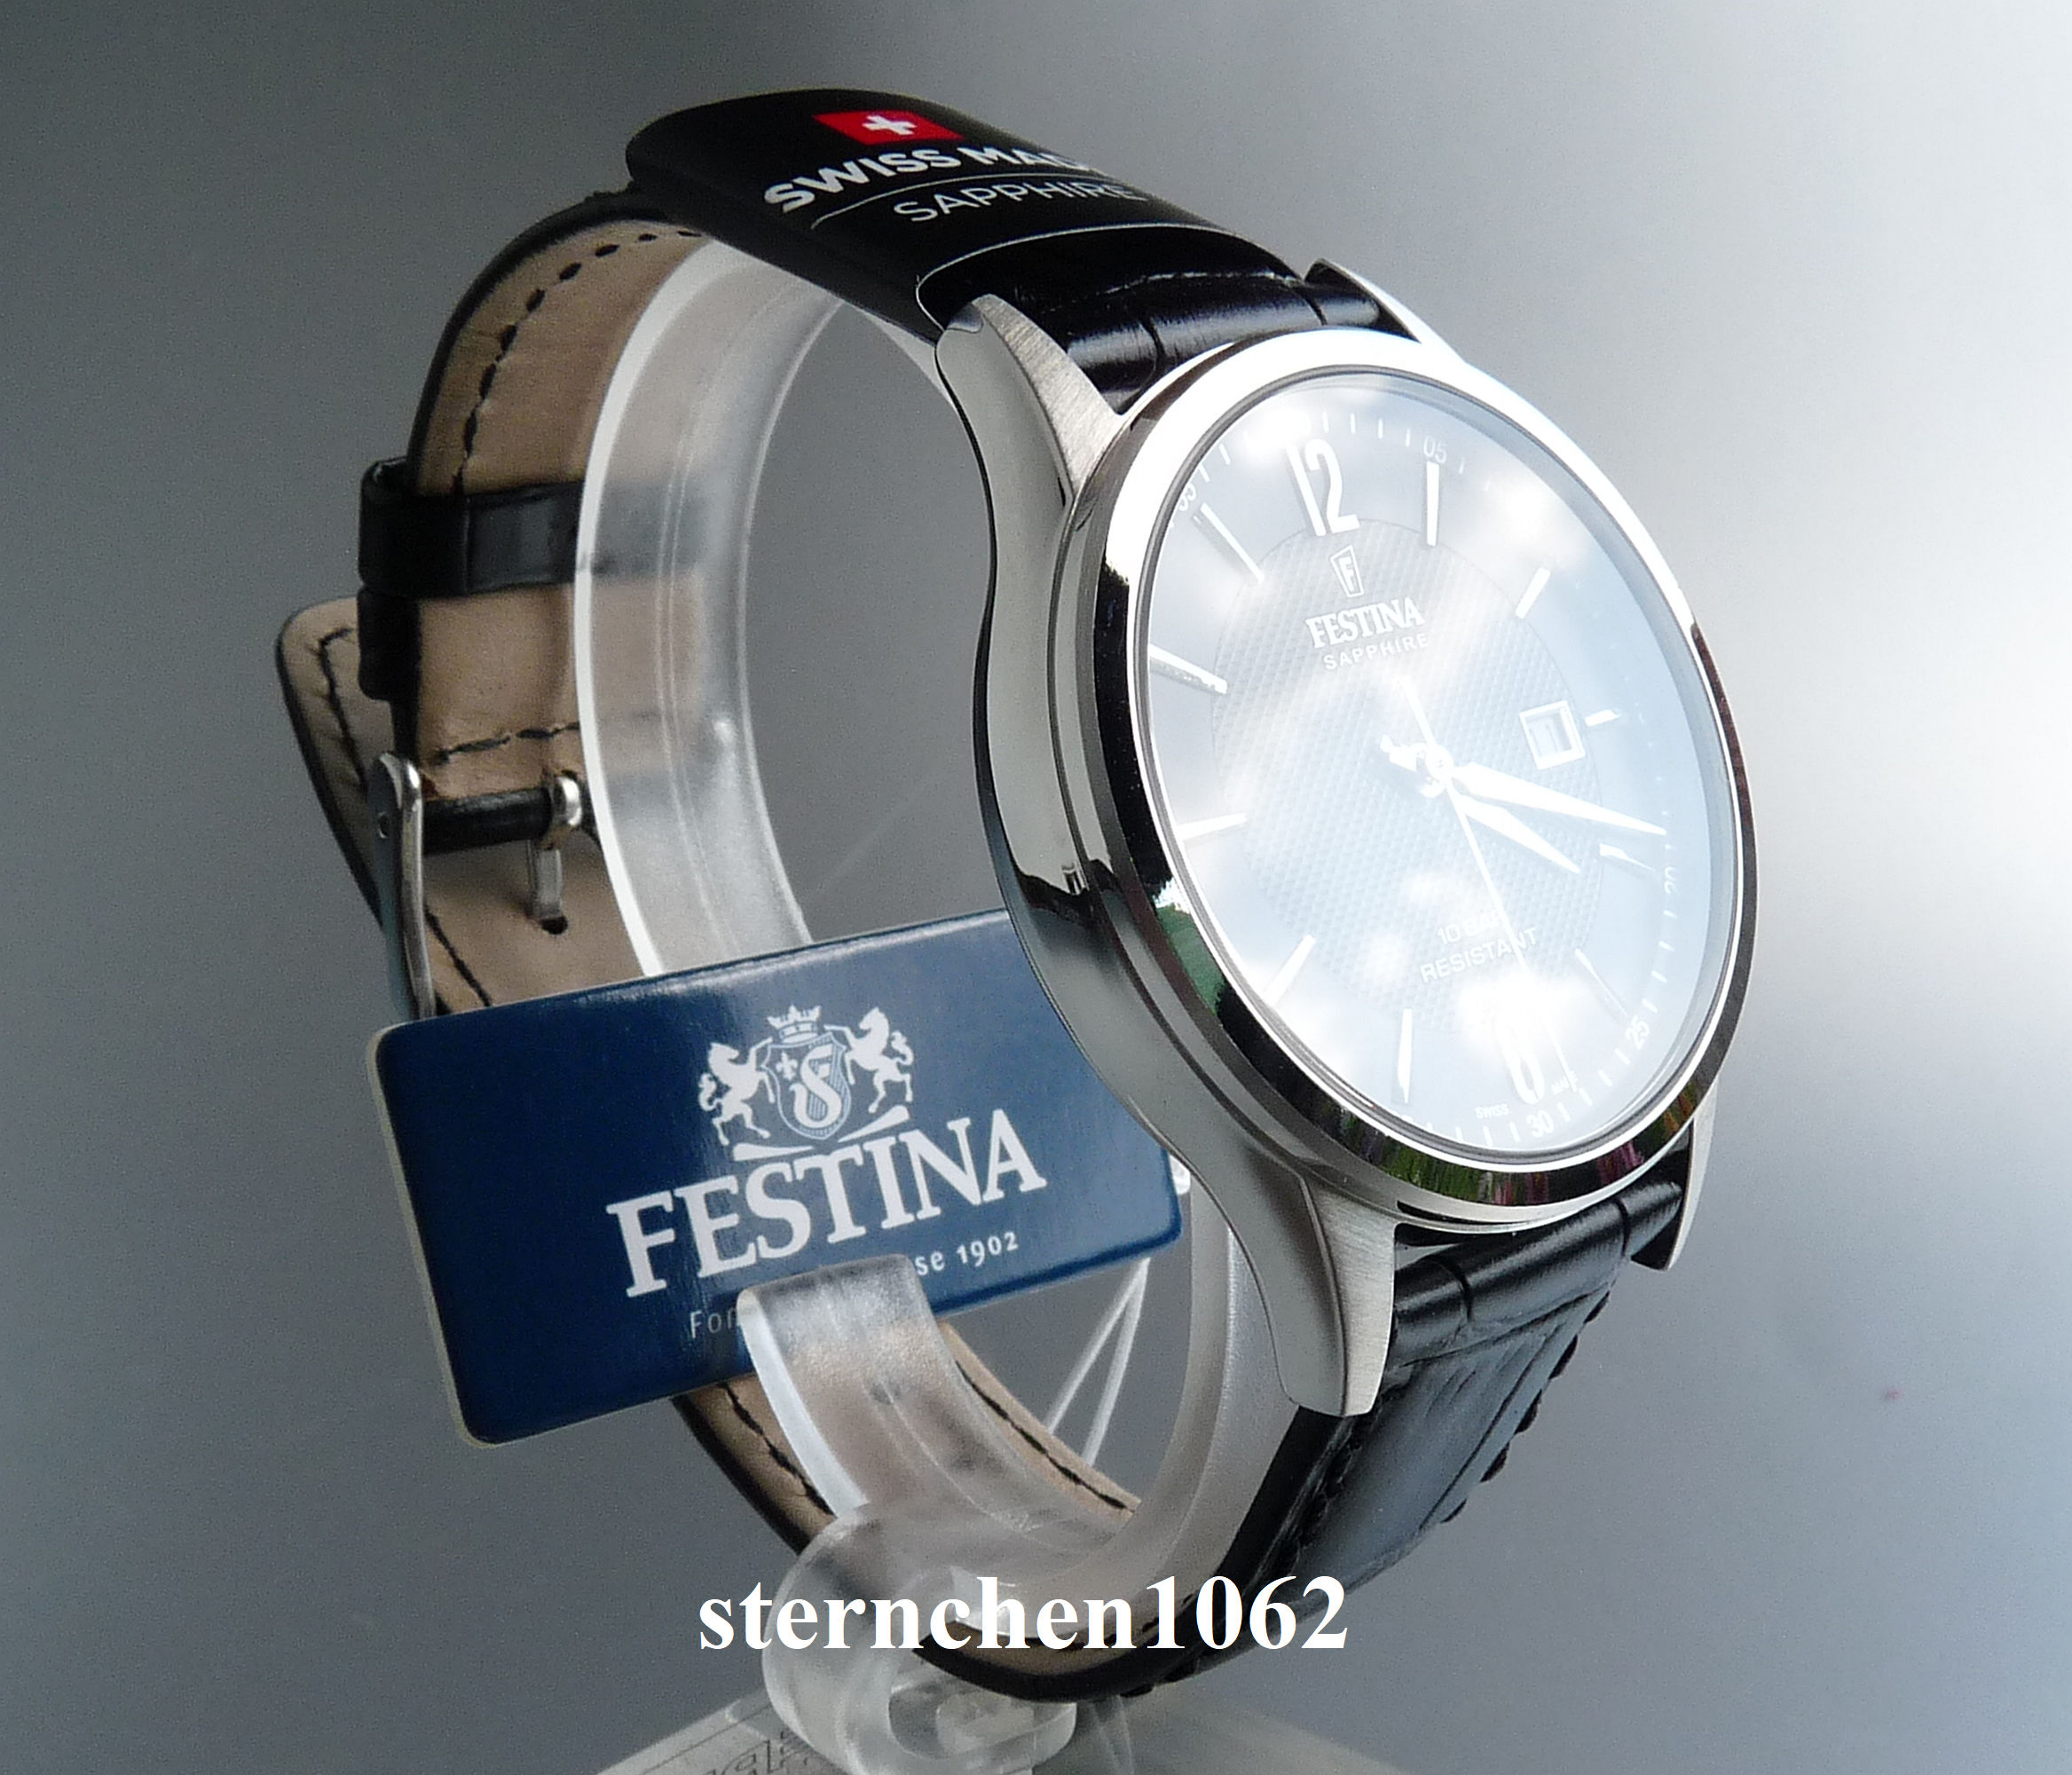 Sternchen 1062 - Festina * Swiss * F20007/4 * Made